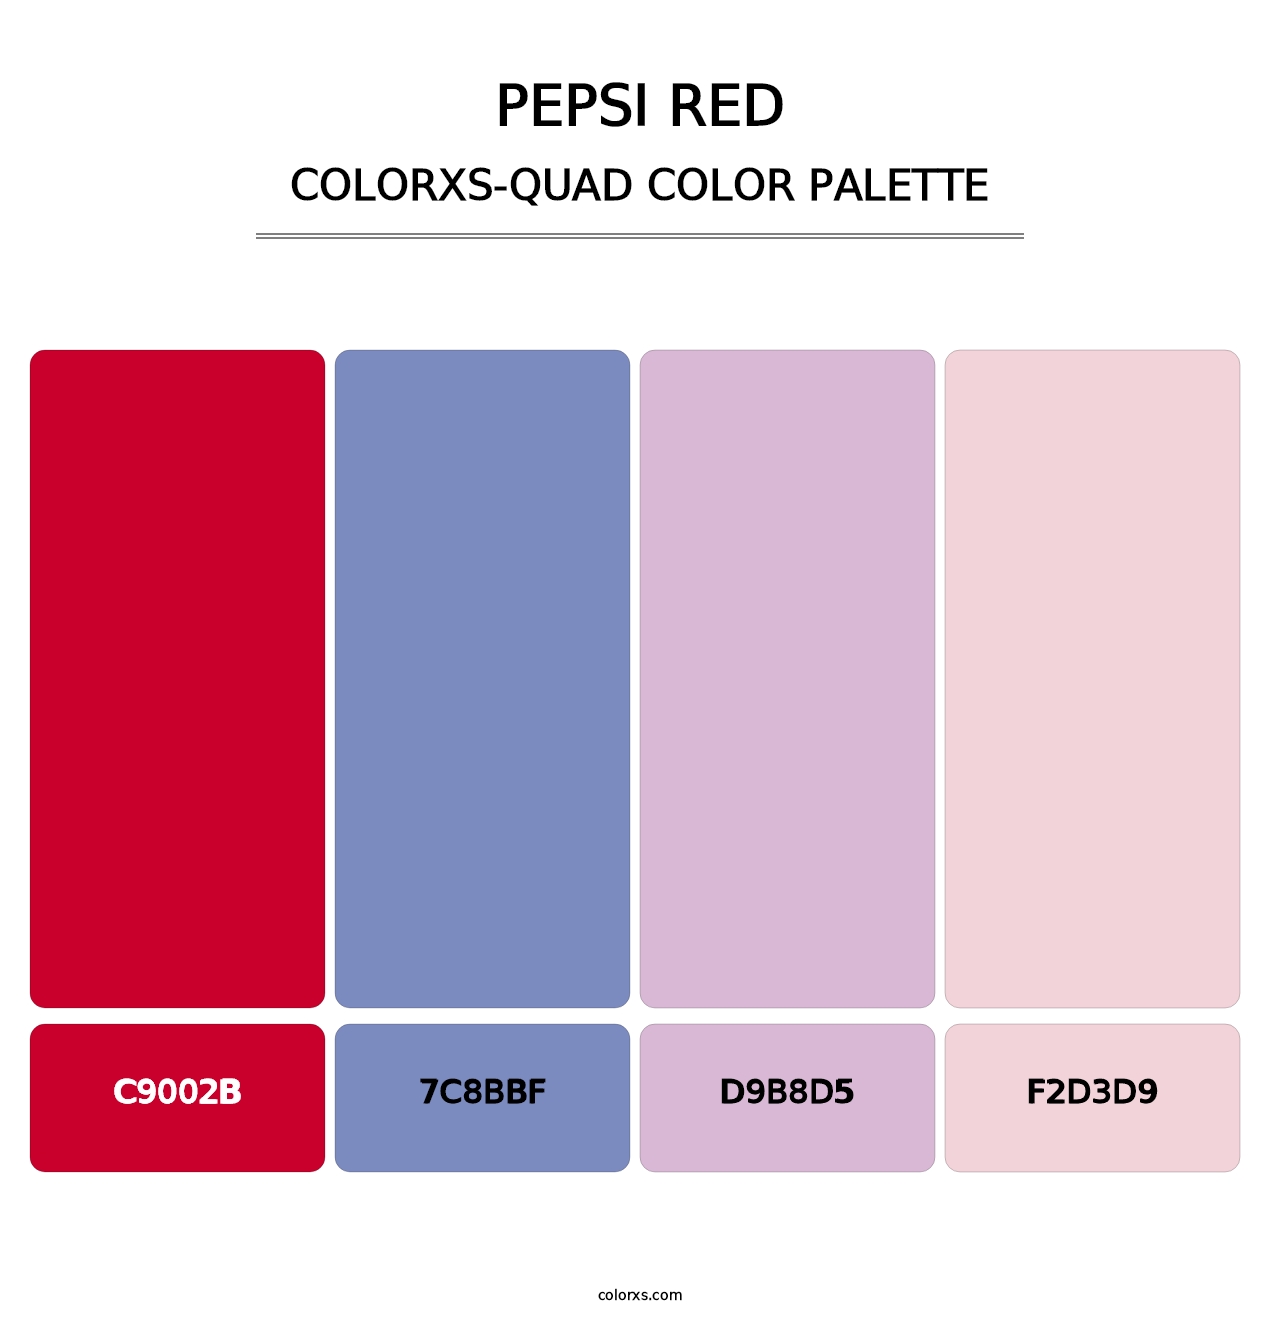 Pepsi Red - Colorxs Quad Palette